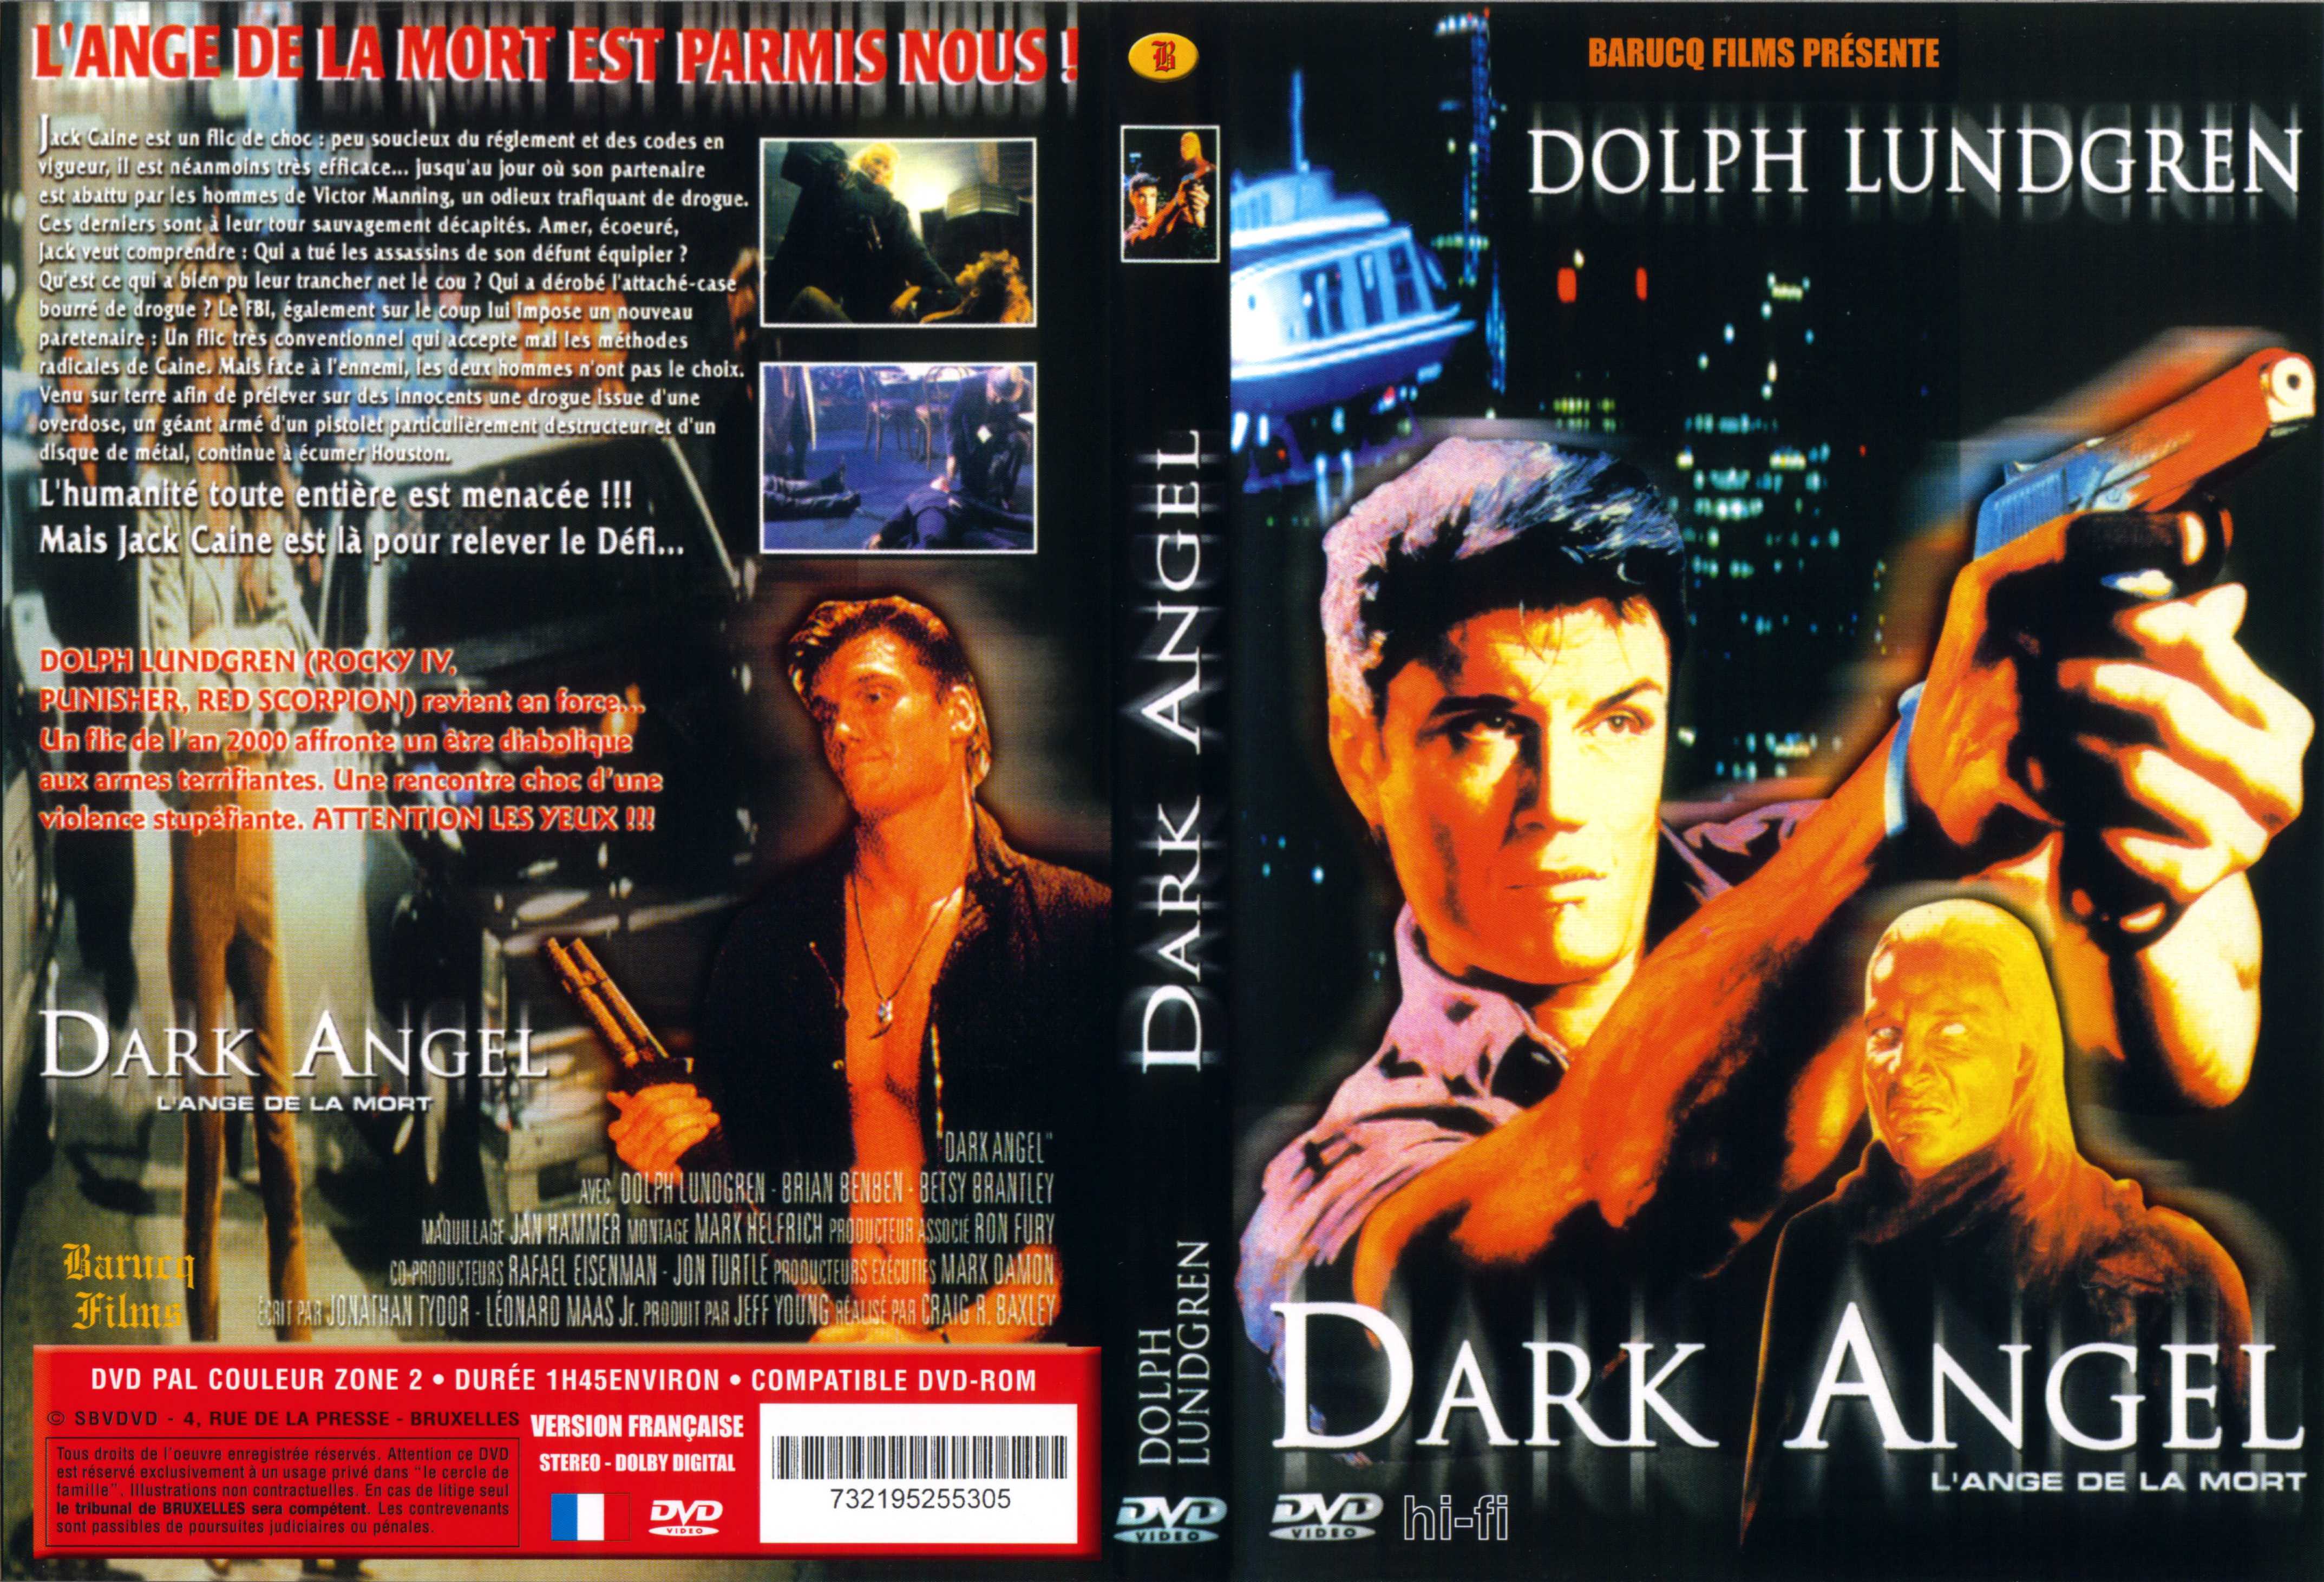 Jaquette DVD Dark angel (Dolph Lundgren) v2